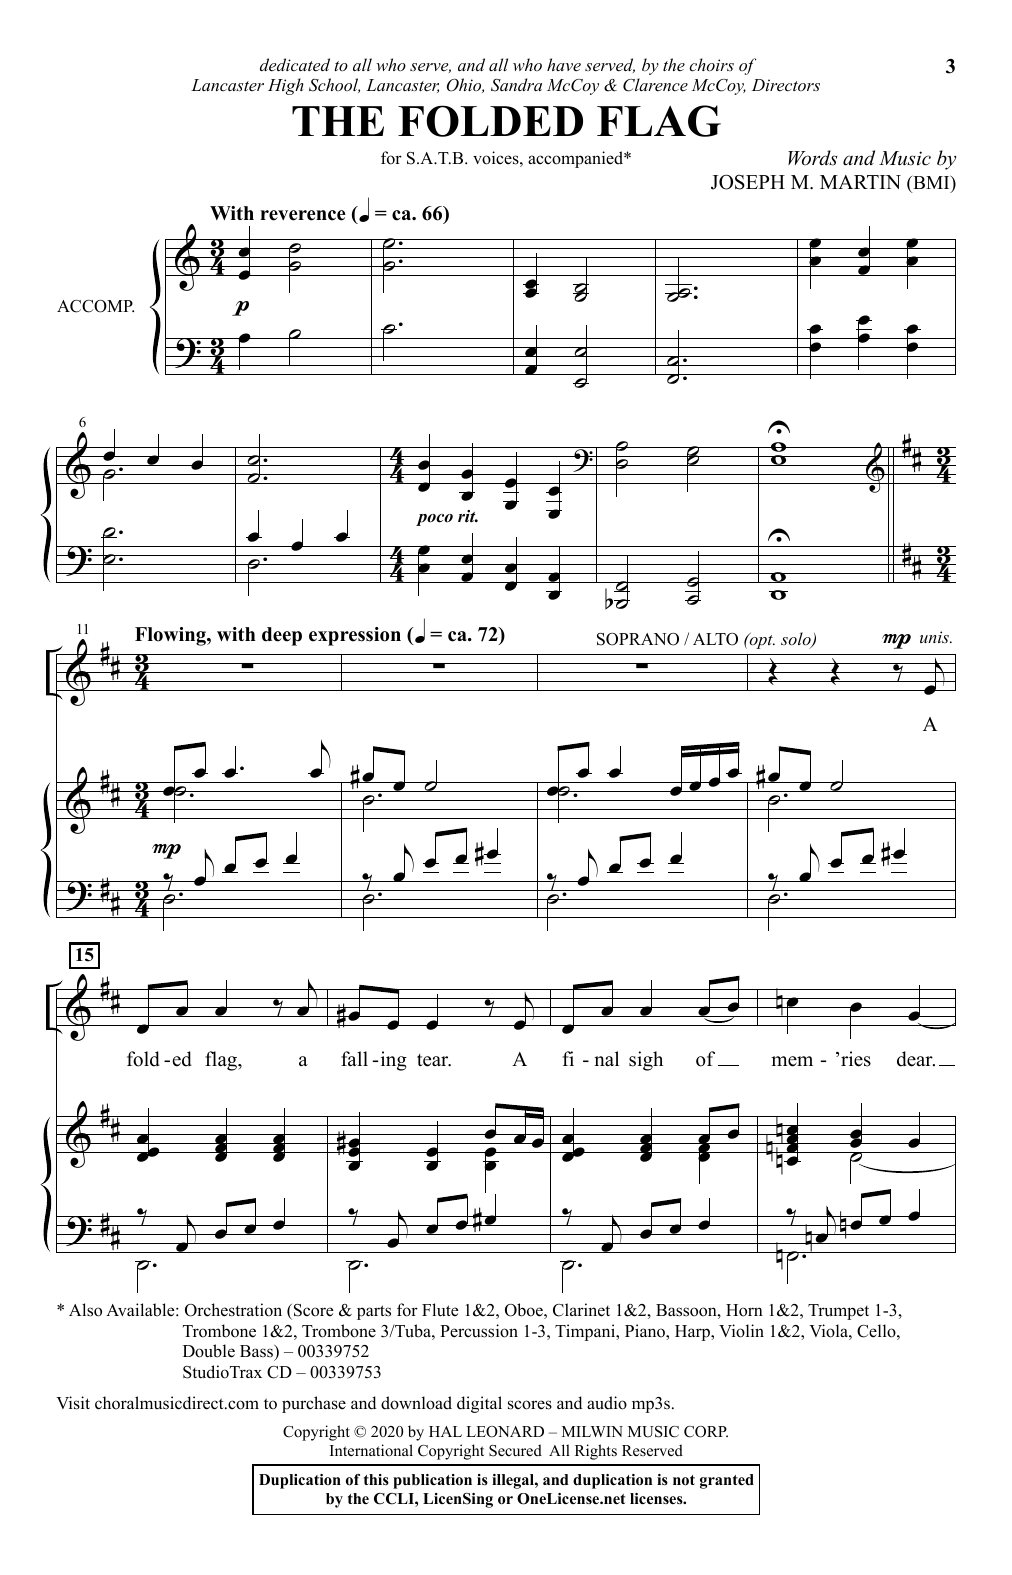 Joseph M. Martin The Folded Flag sheet music notes and chords arranged for SATB Choir